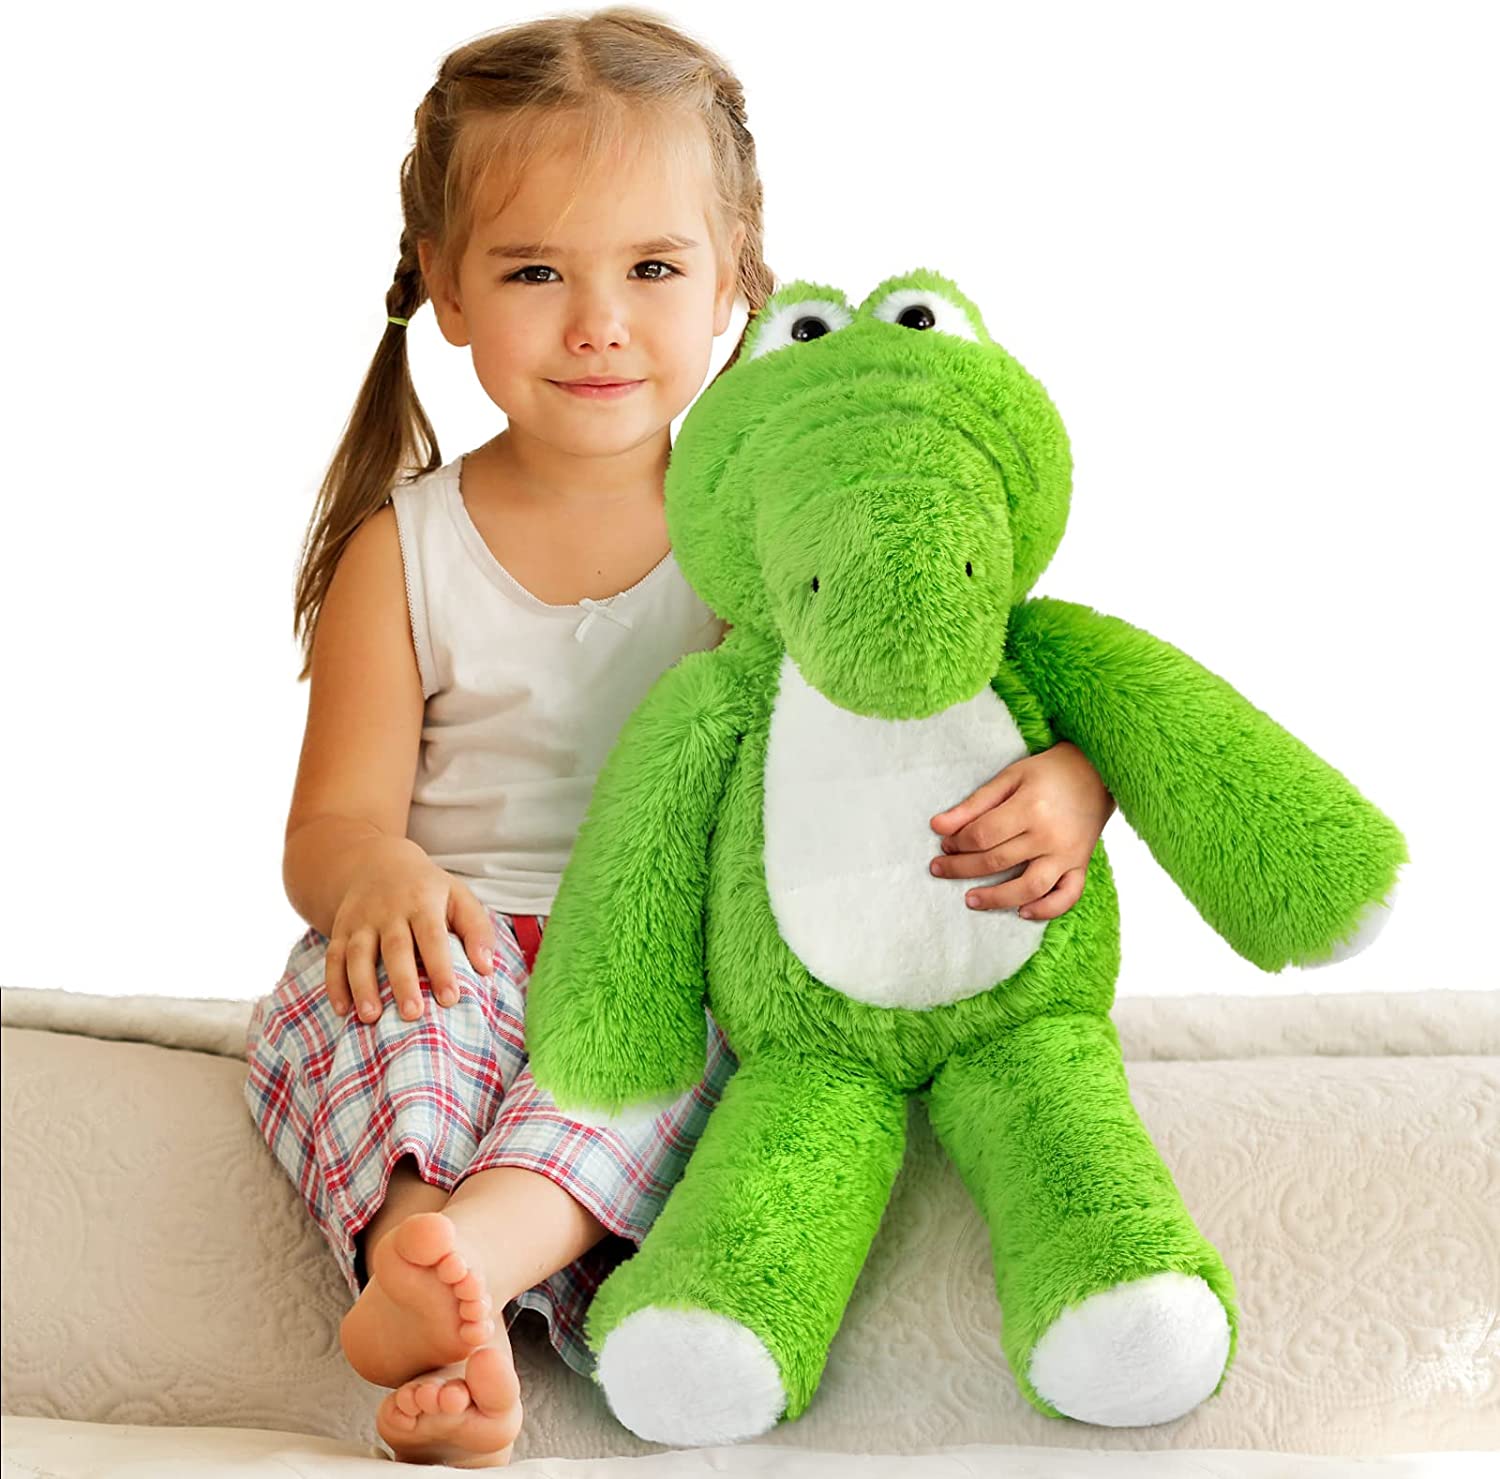 Alligator Stuffed Animal, 24 Inches, Green